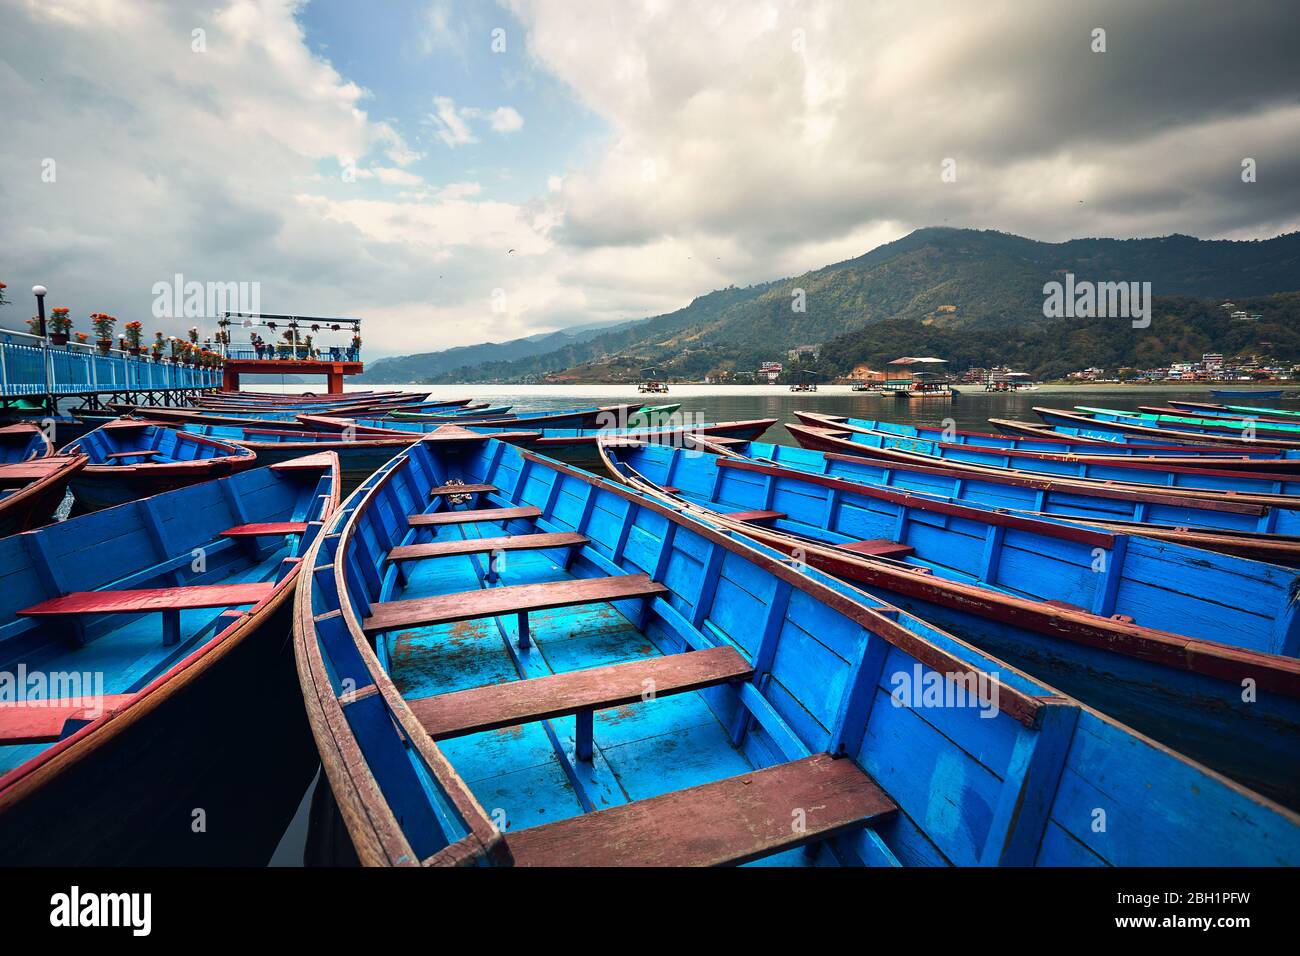 Blue boats at Phewa lake shore in Pokhara, Nepal. Stock Photo